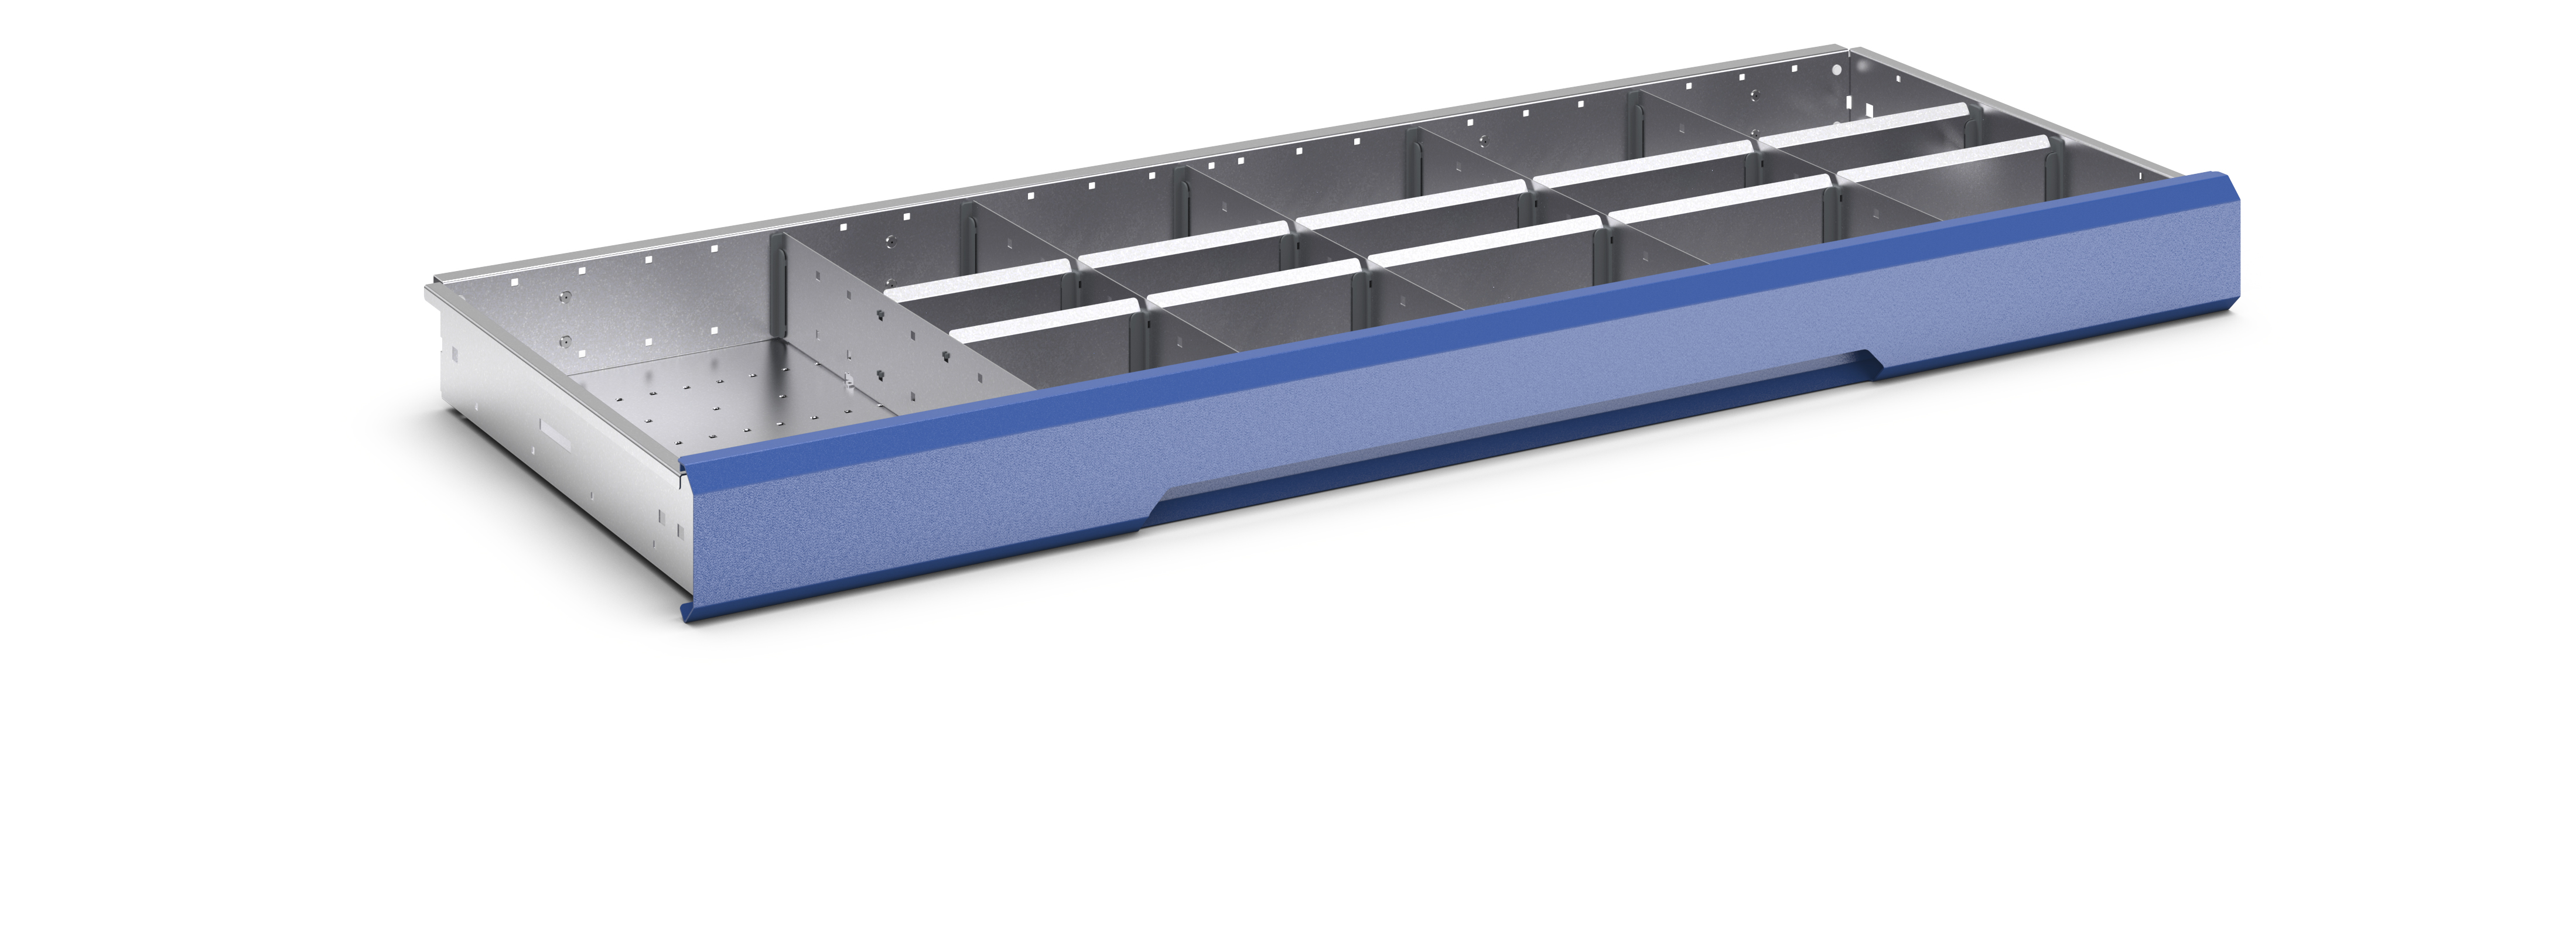 Bott Verso Adjustable Metal Divider Kit 16 Compartment - 16926862.51